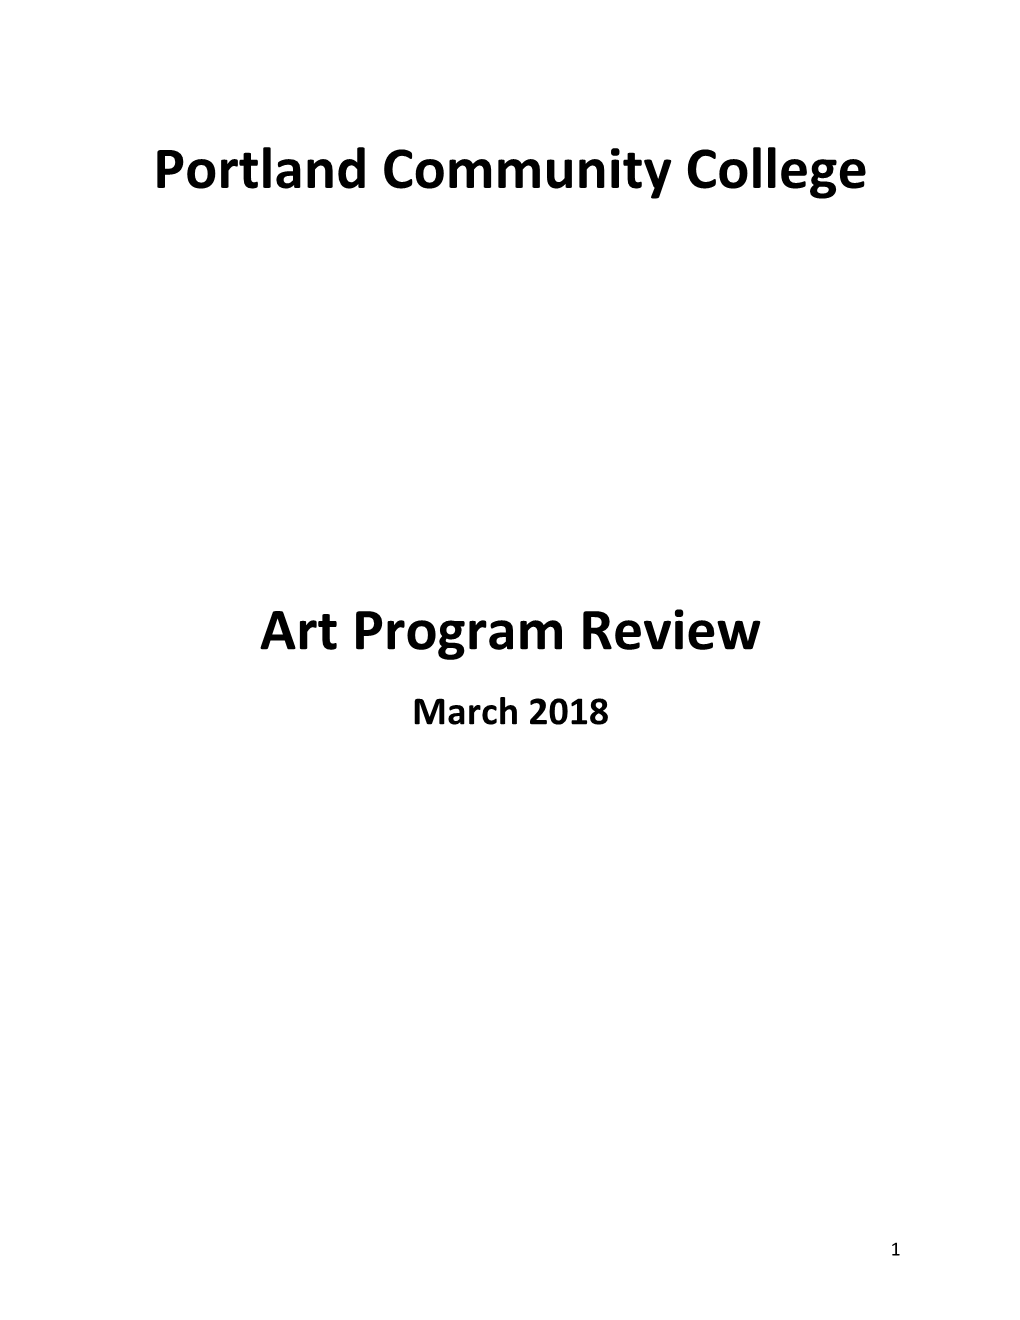 Portland Community College Art Program Review